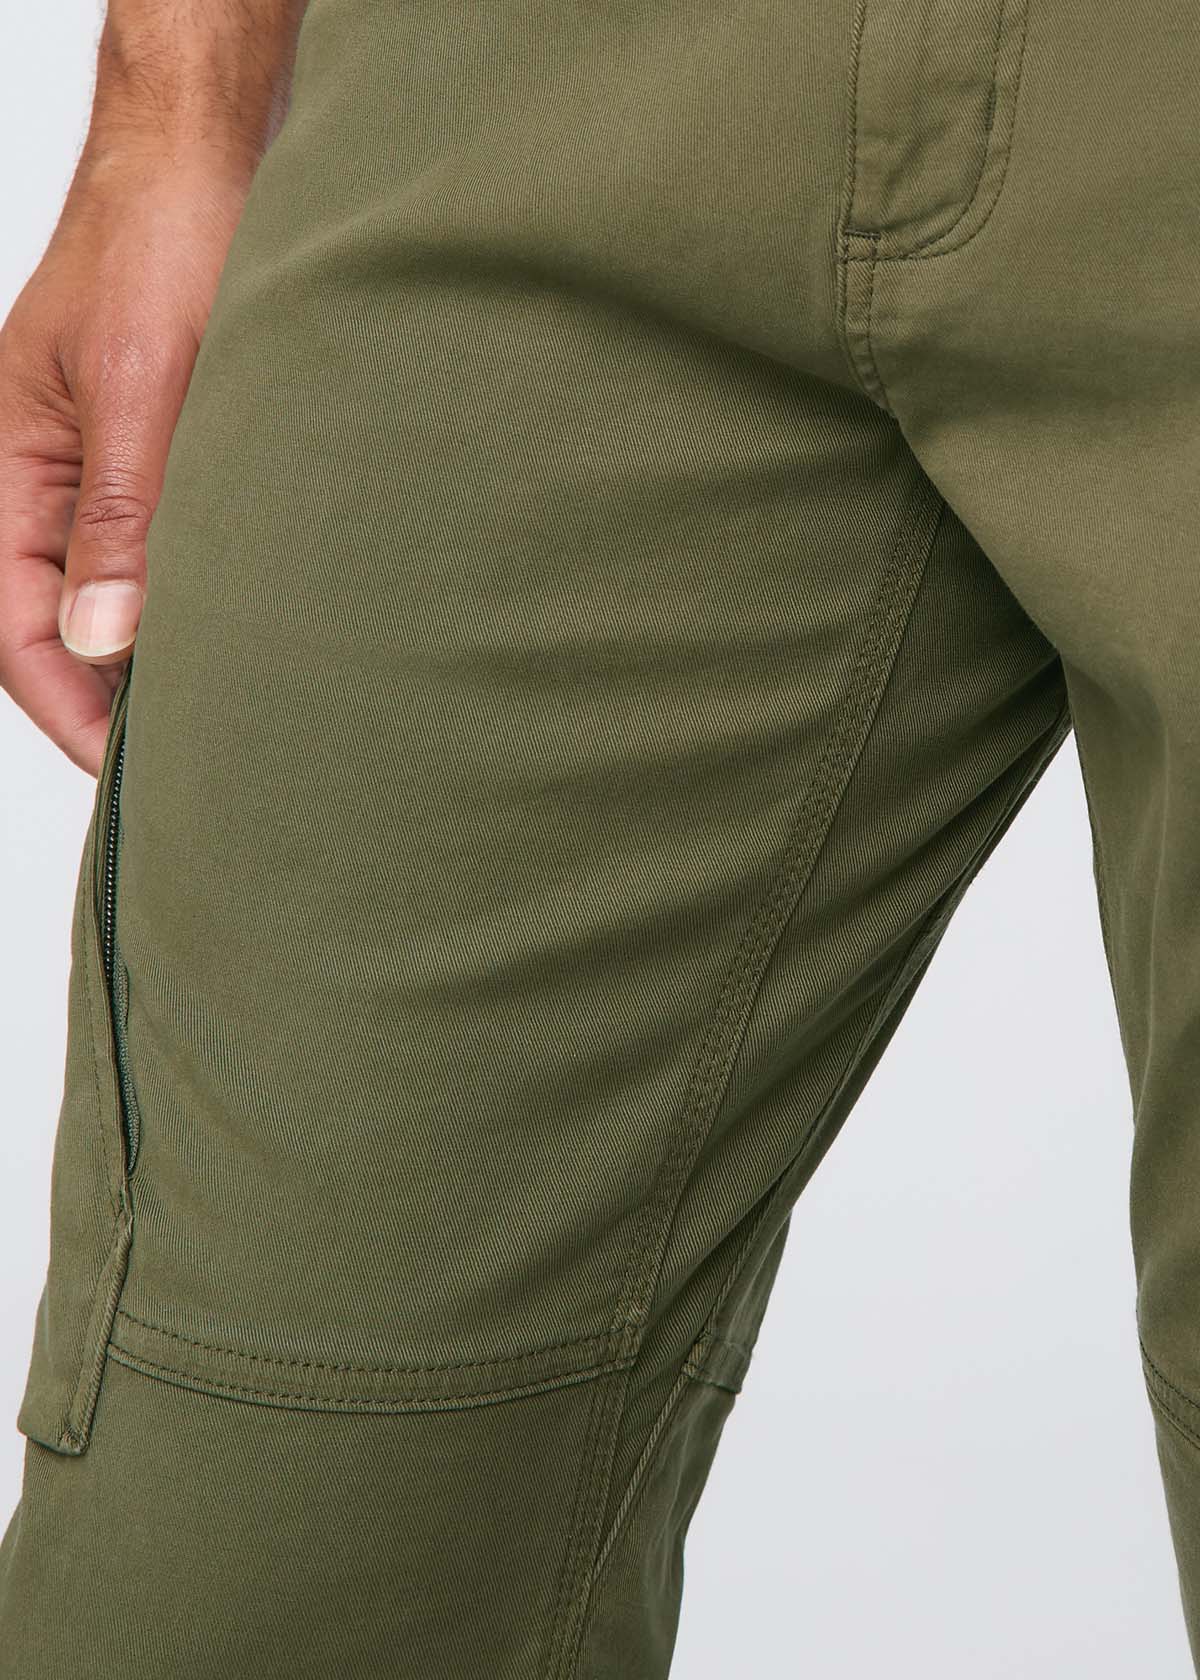 mens dark green athletic water resistant pant gusset